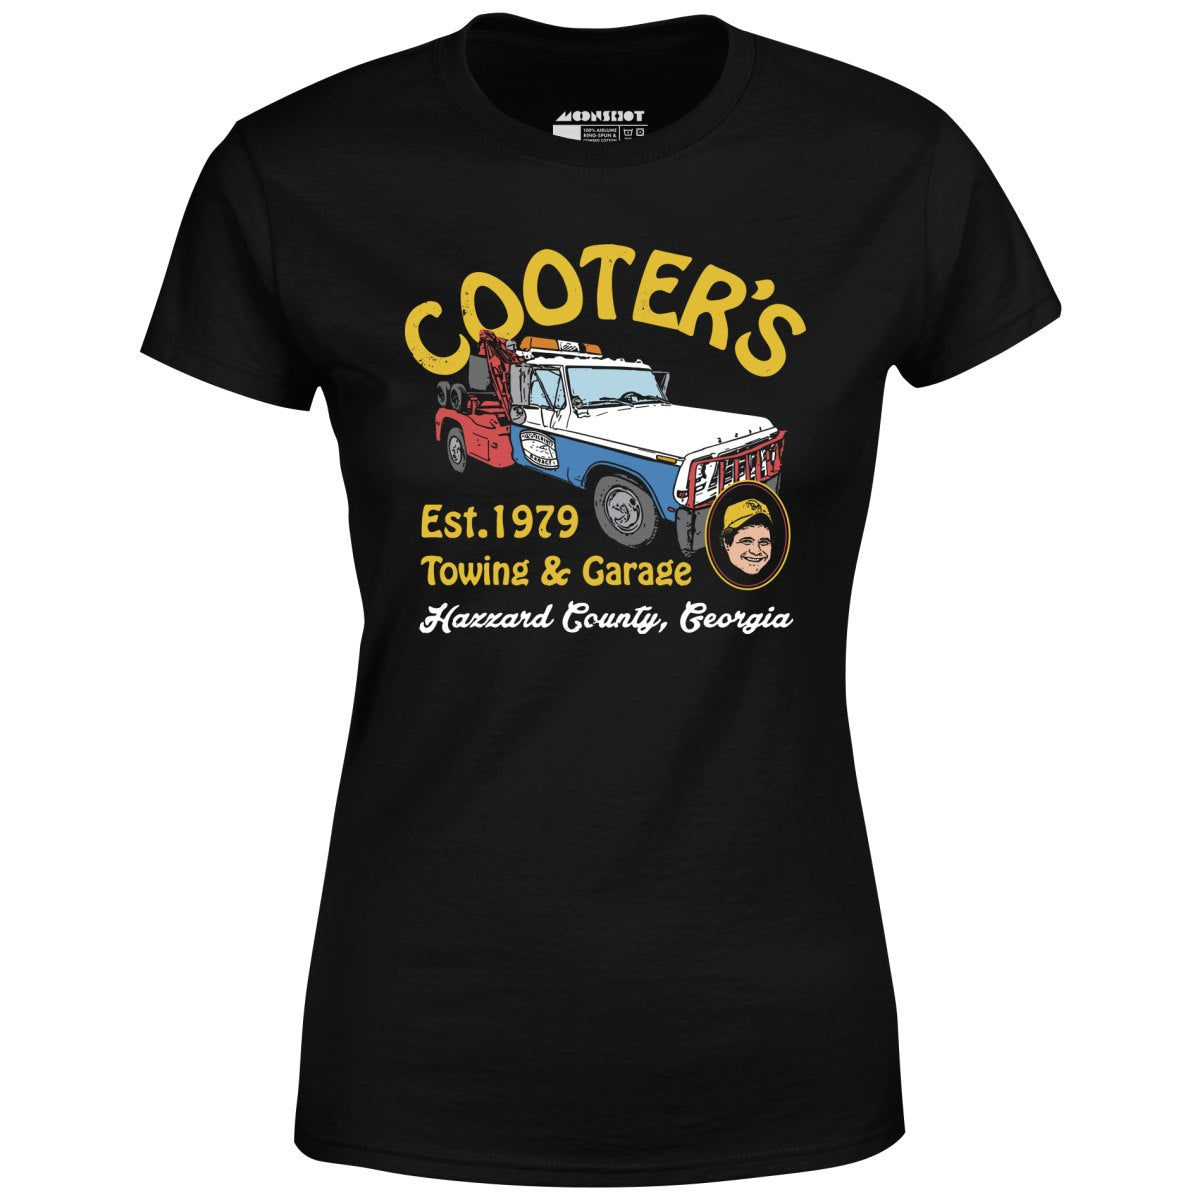 Cooter's Towing & Garage - Women's T-Shirt